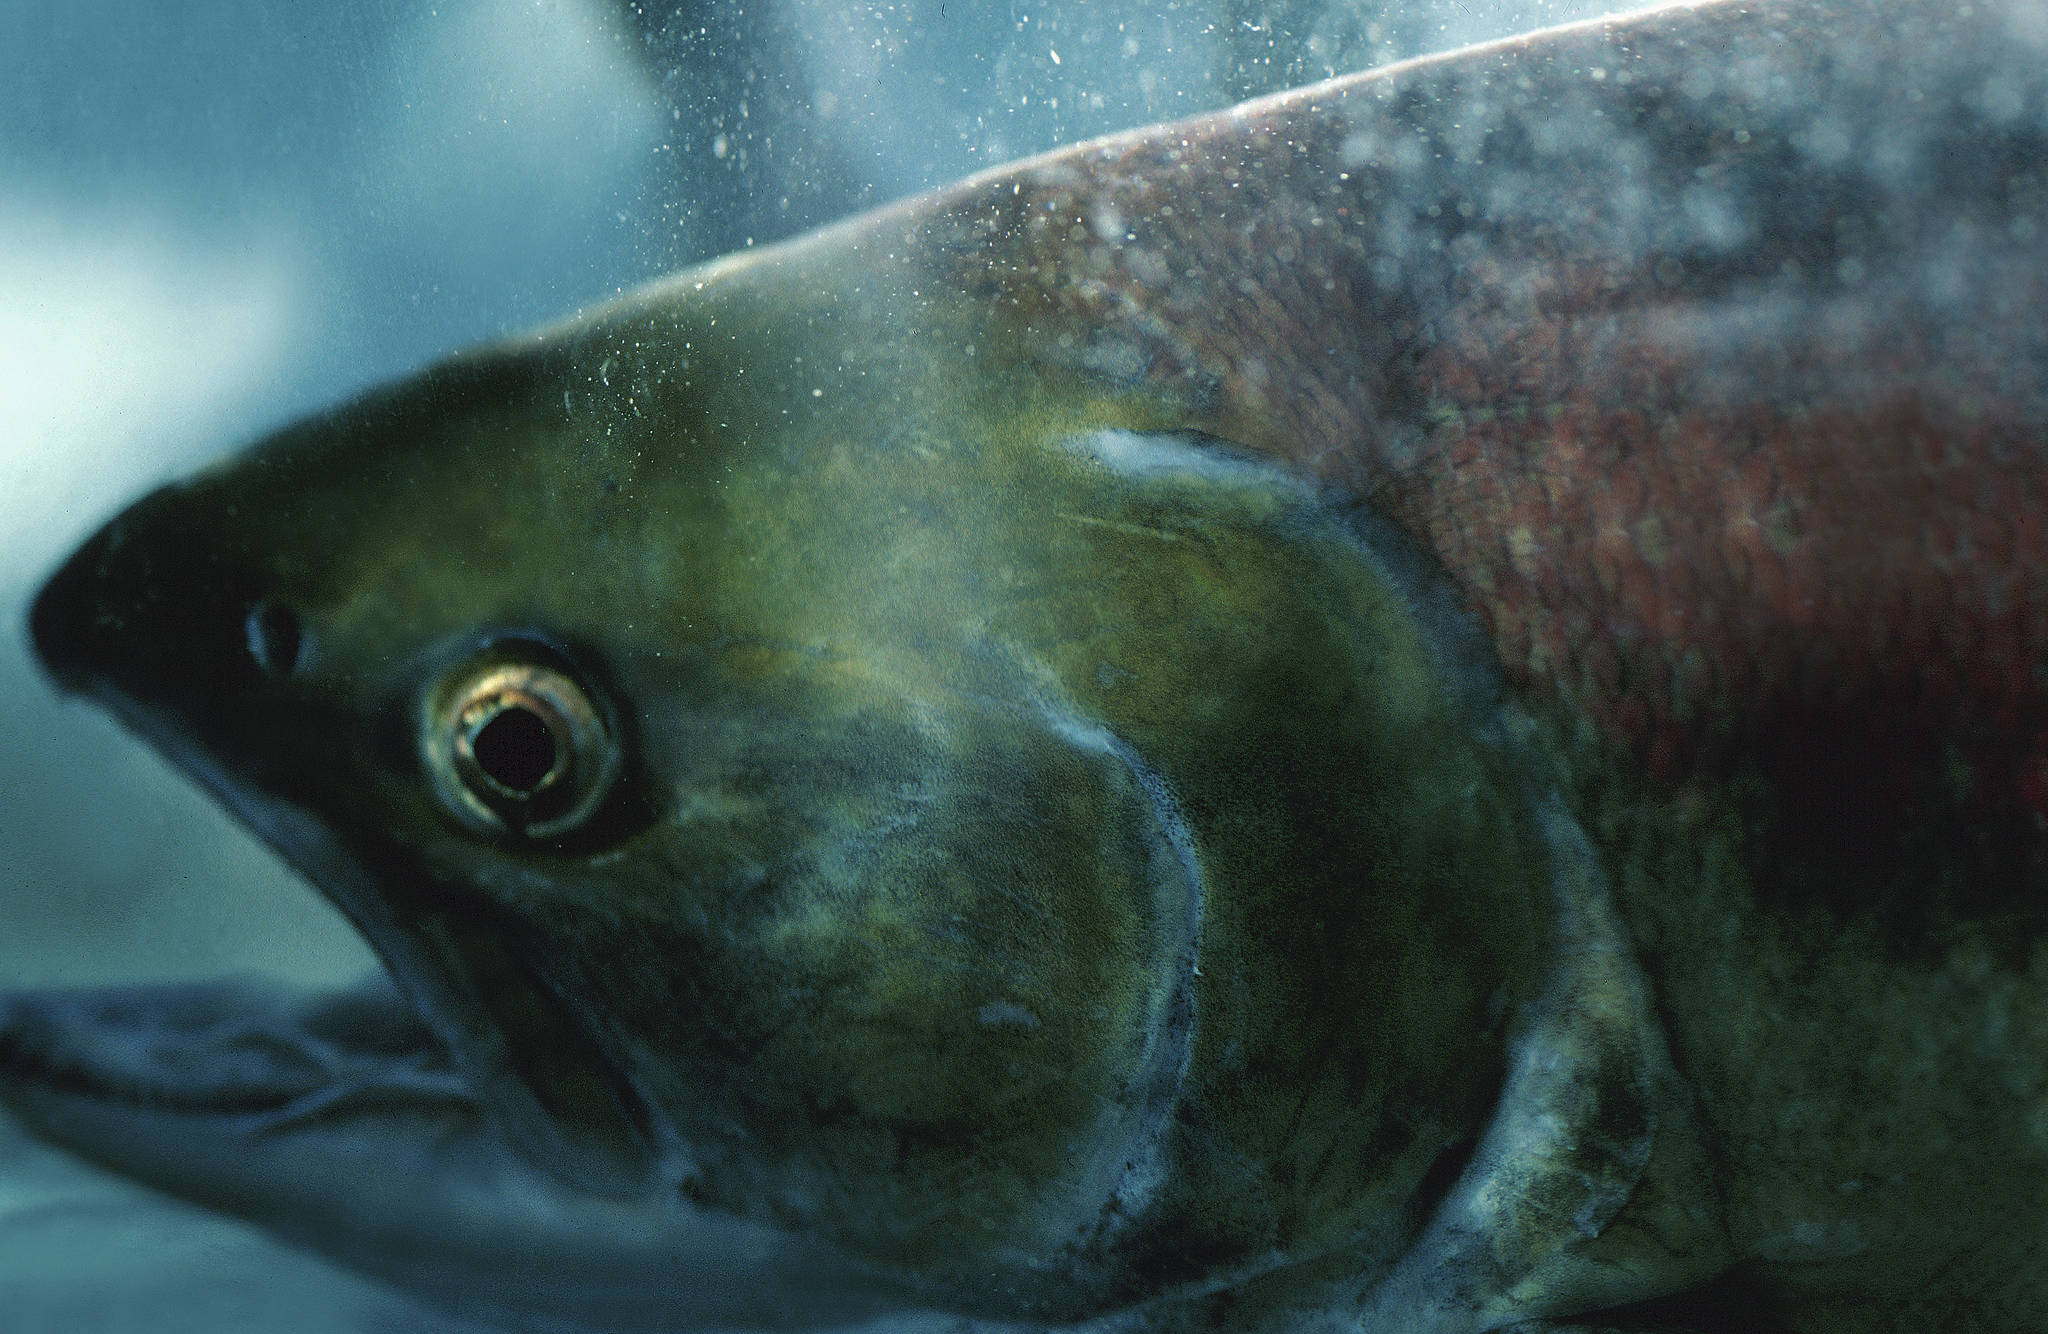 Salmon defenders propose 2018 ballot initative, predict huge fish fight